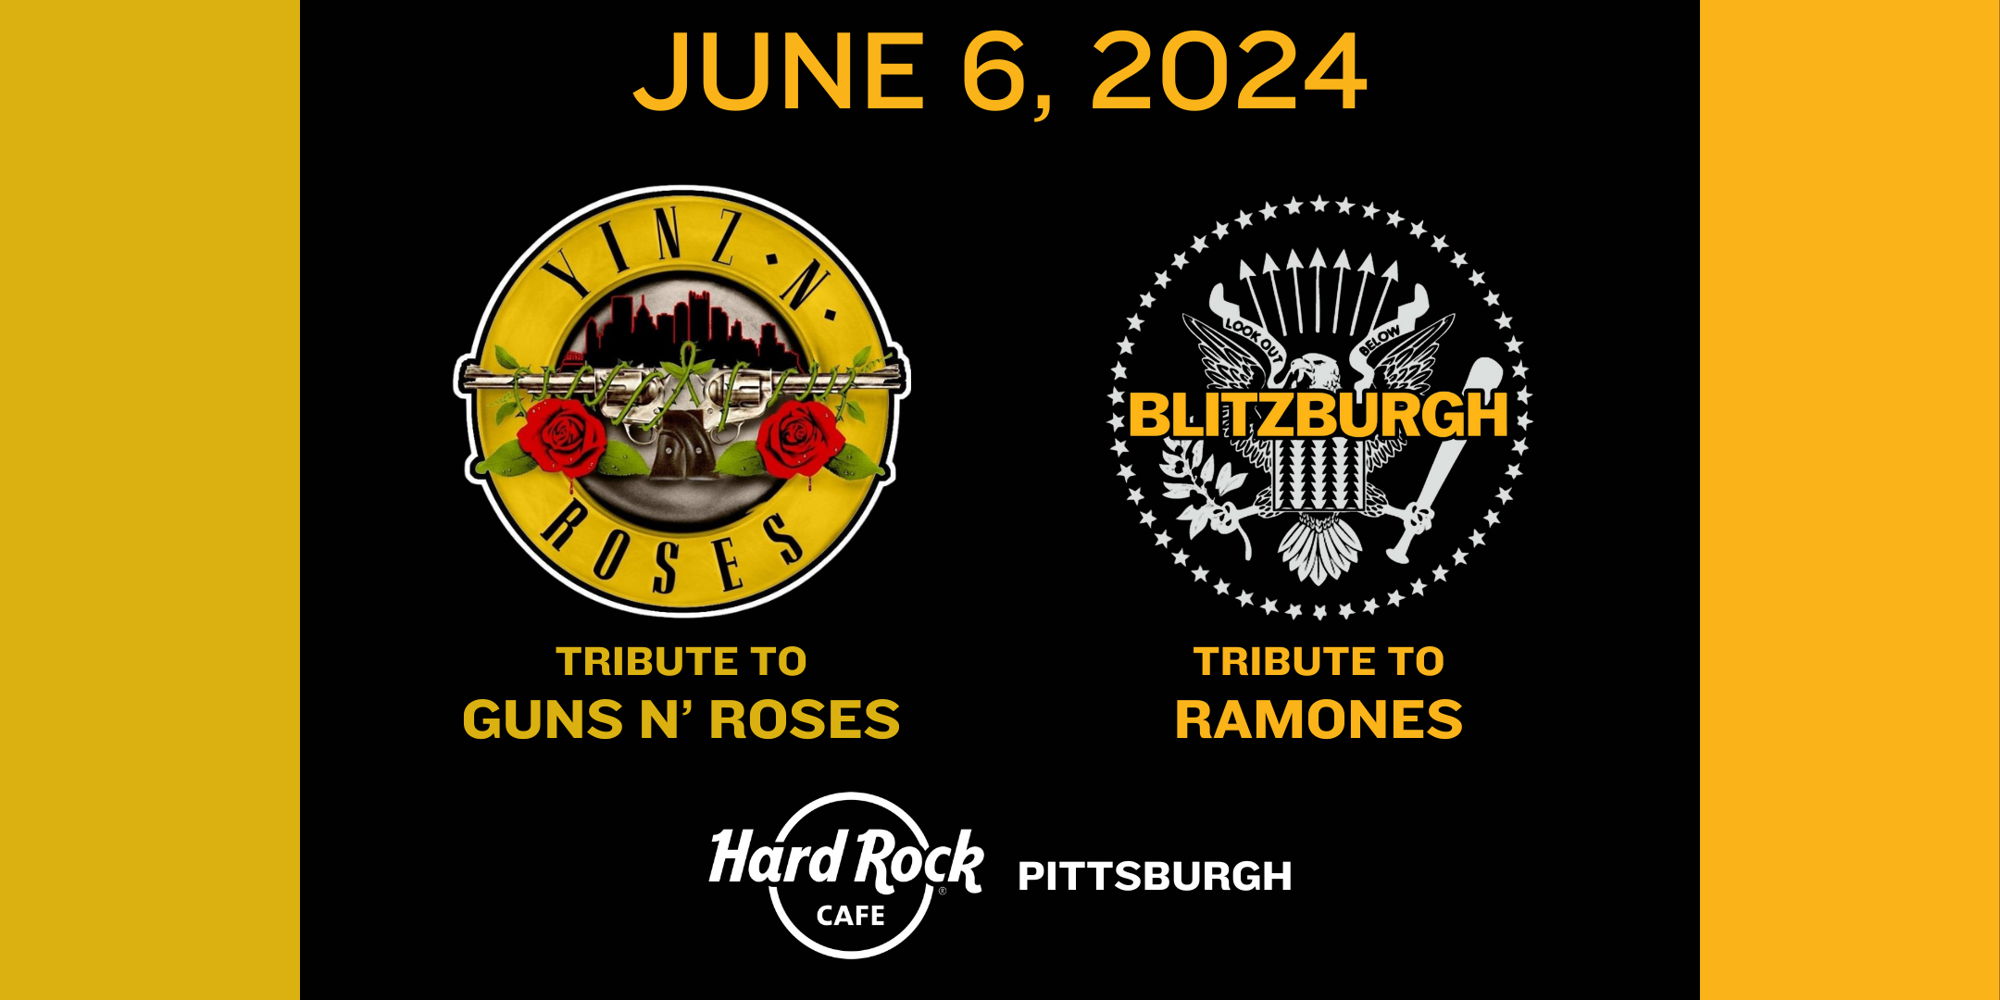 Yinz N' Roses (Guns N' Roses) & Blitzburgh (Ramones) promotional image